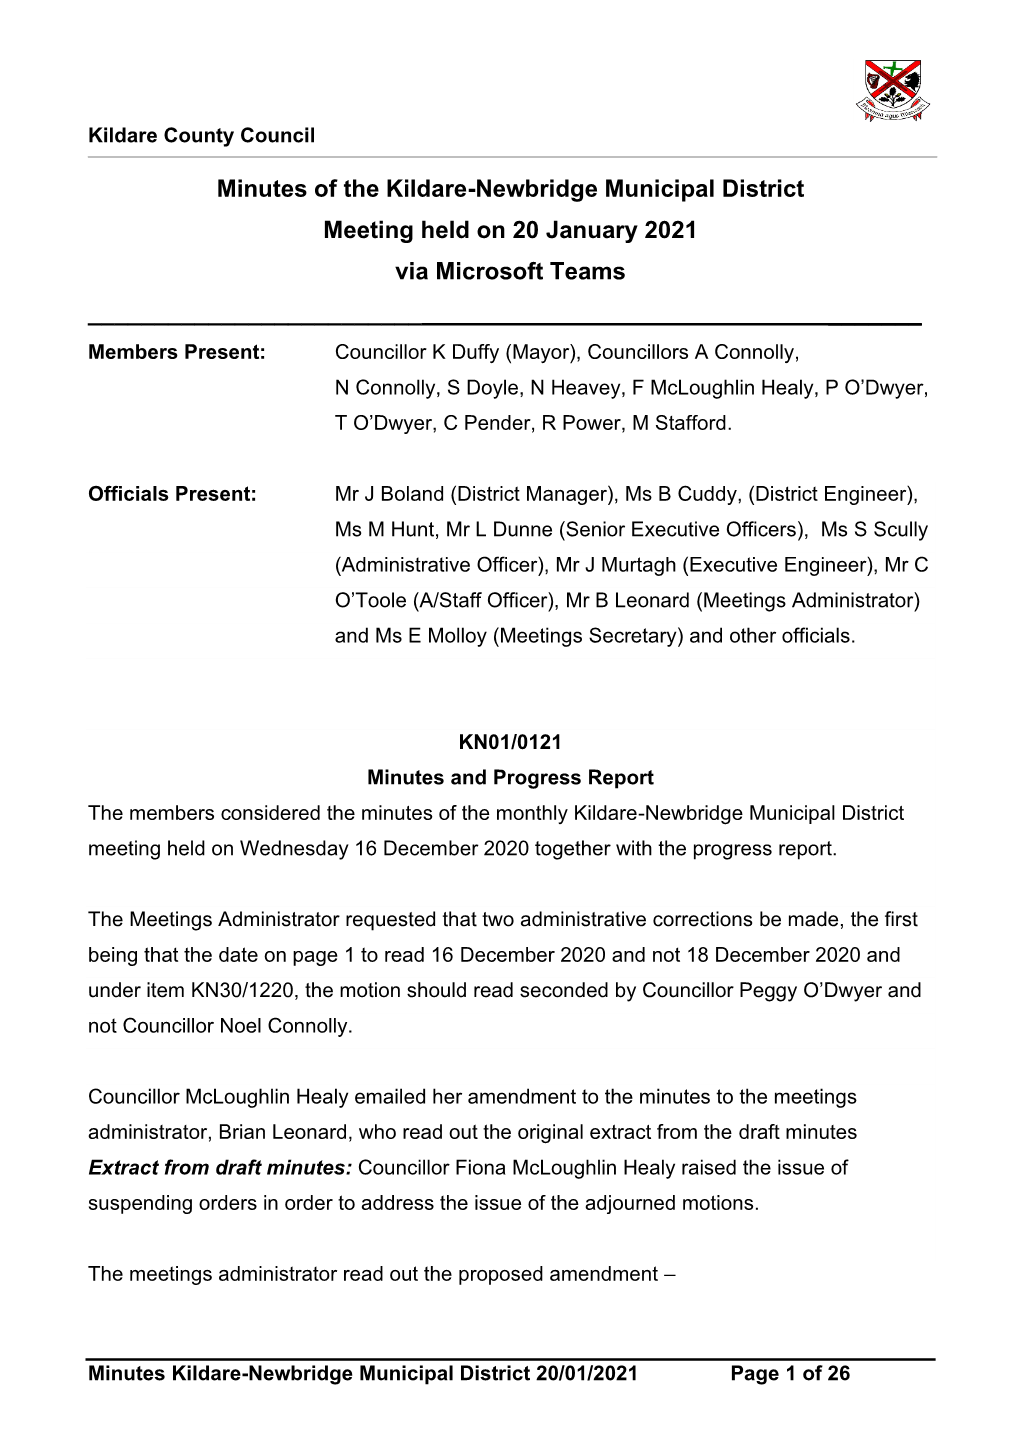 Minutes of the Kildare-Newbridge Municipal District Meeting Held On